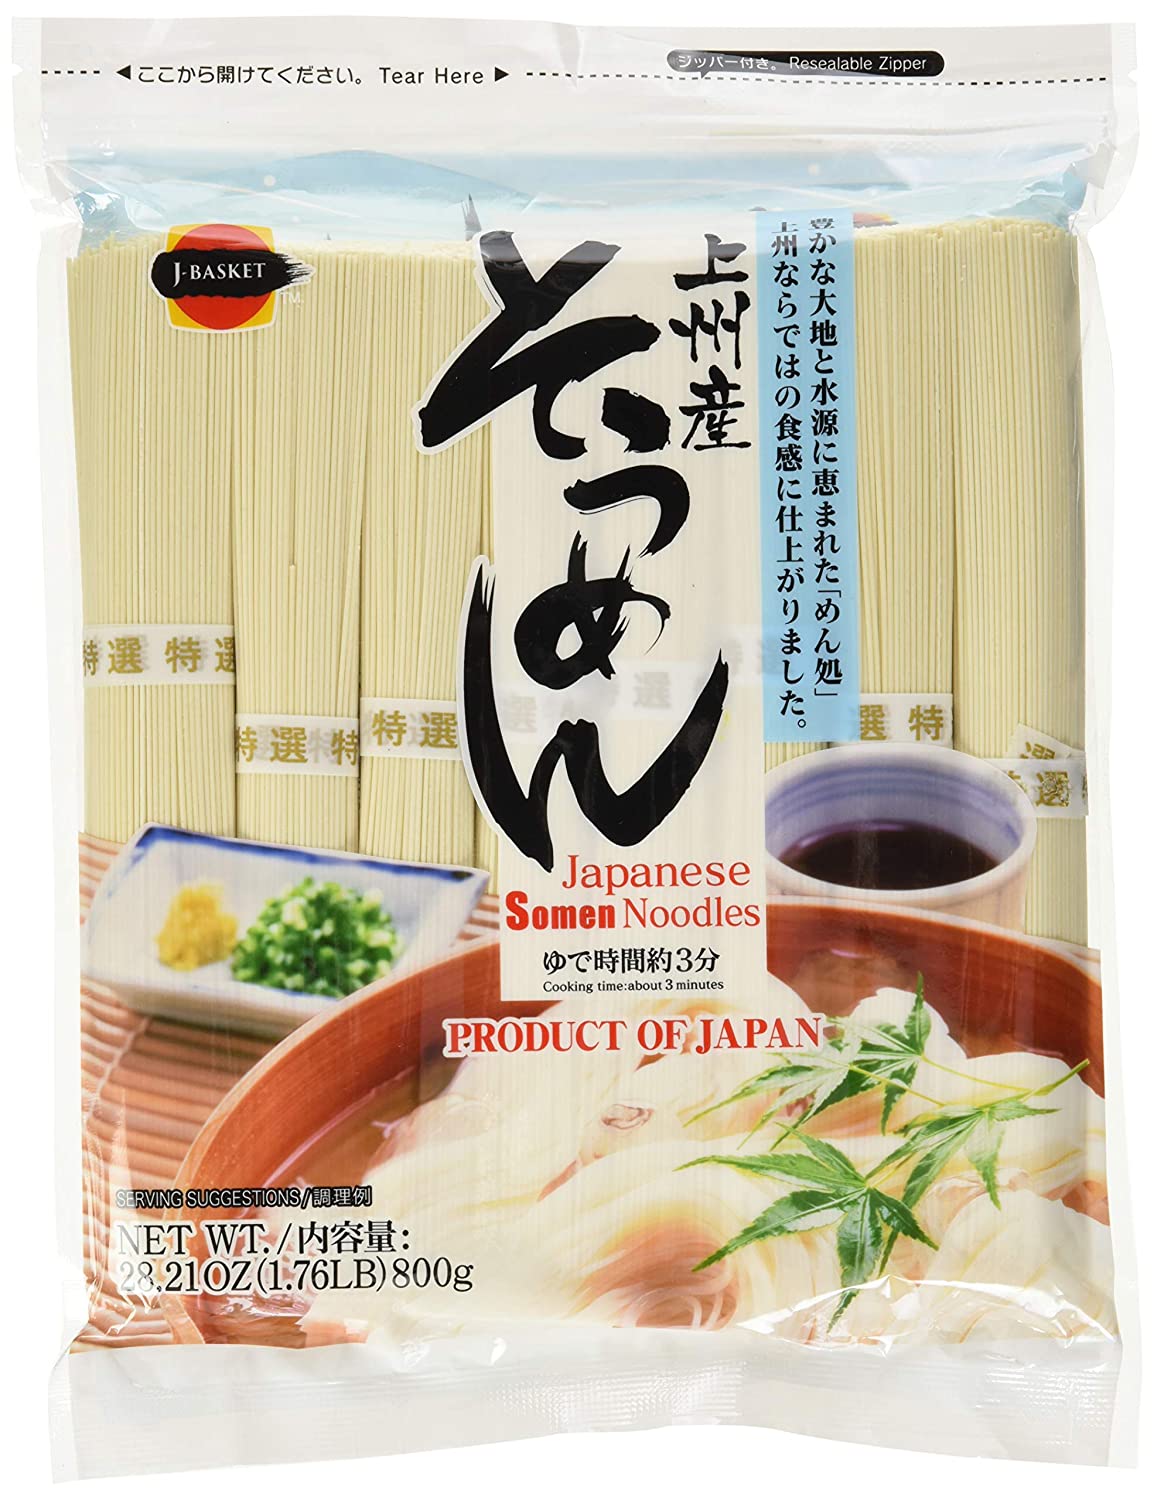 याकिसोबाका लागि उत्कृष्ट नूडल्स - हिमे चुकमेन